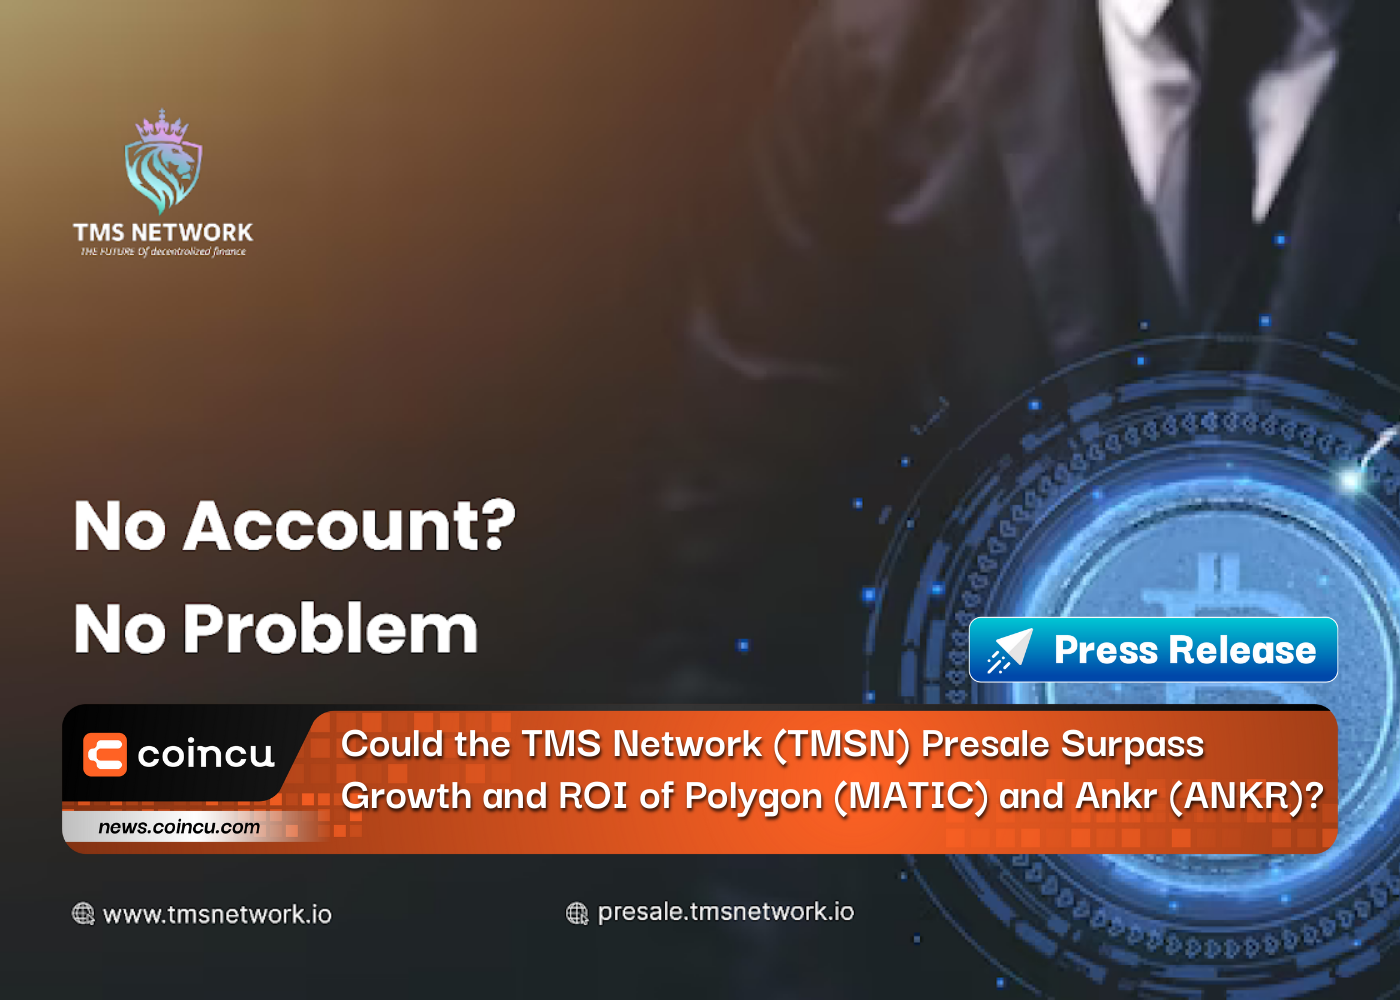 Could the TMS Network TMSN Presale Surpass